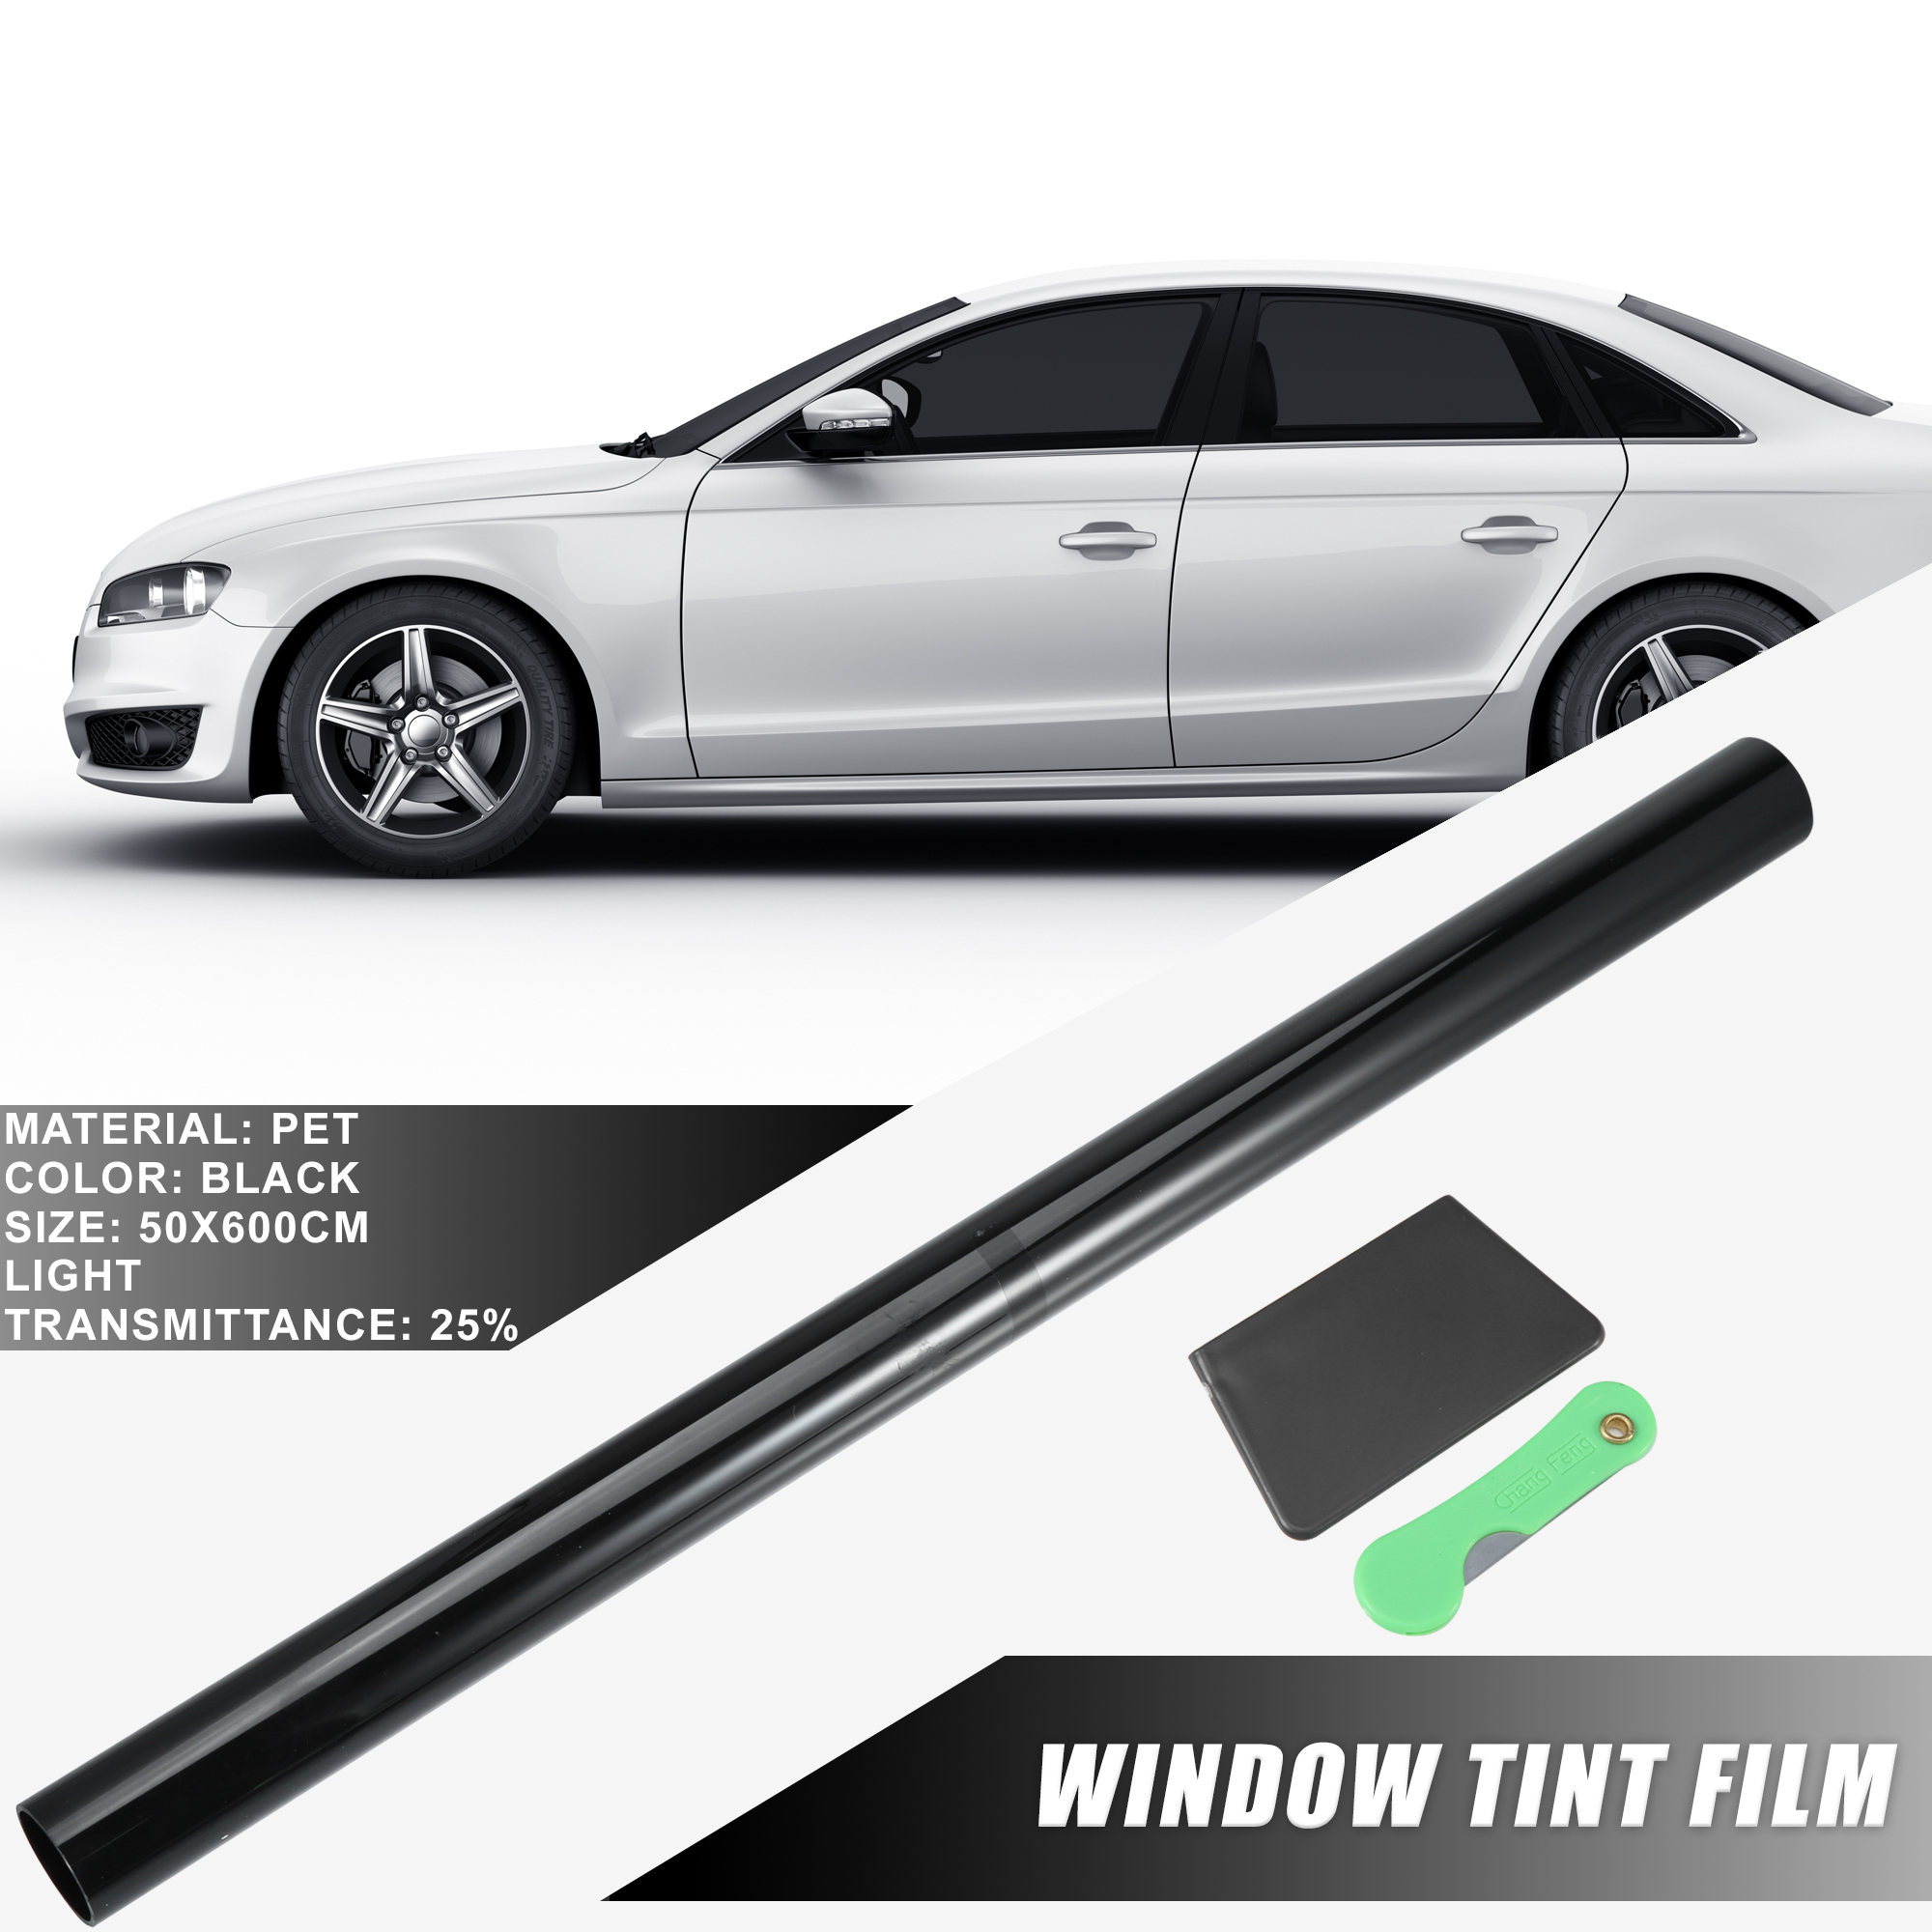 Unique Bargains 1 Set Universal Car Window Tint Film Tinting Dark Black 25% 50x600cm 20"x236"